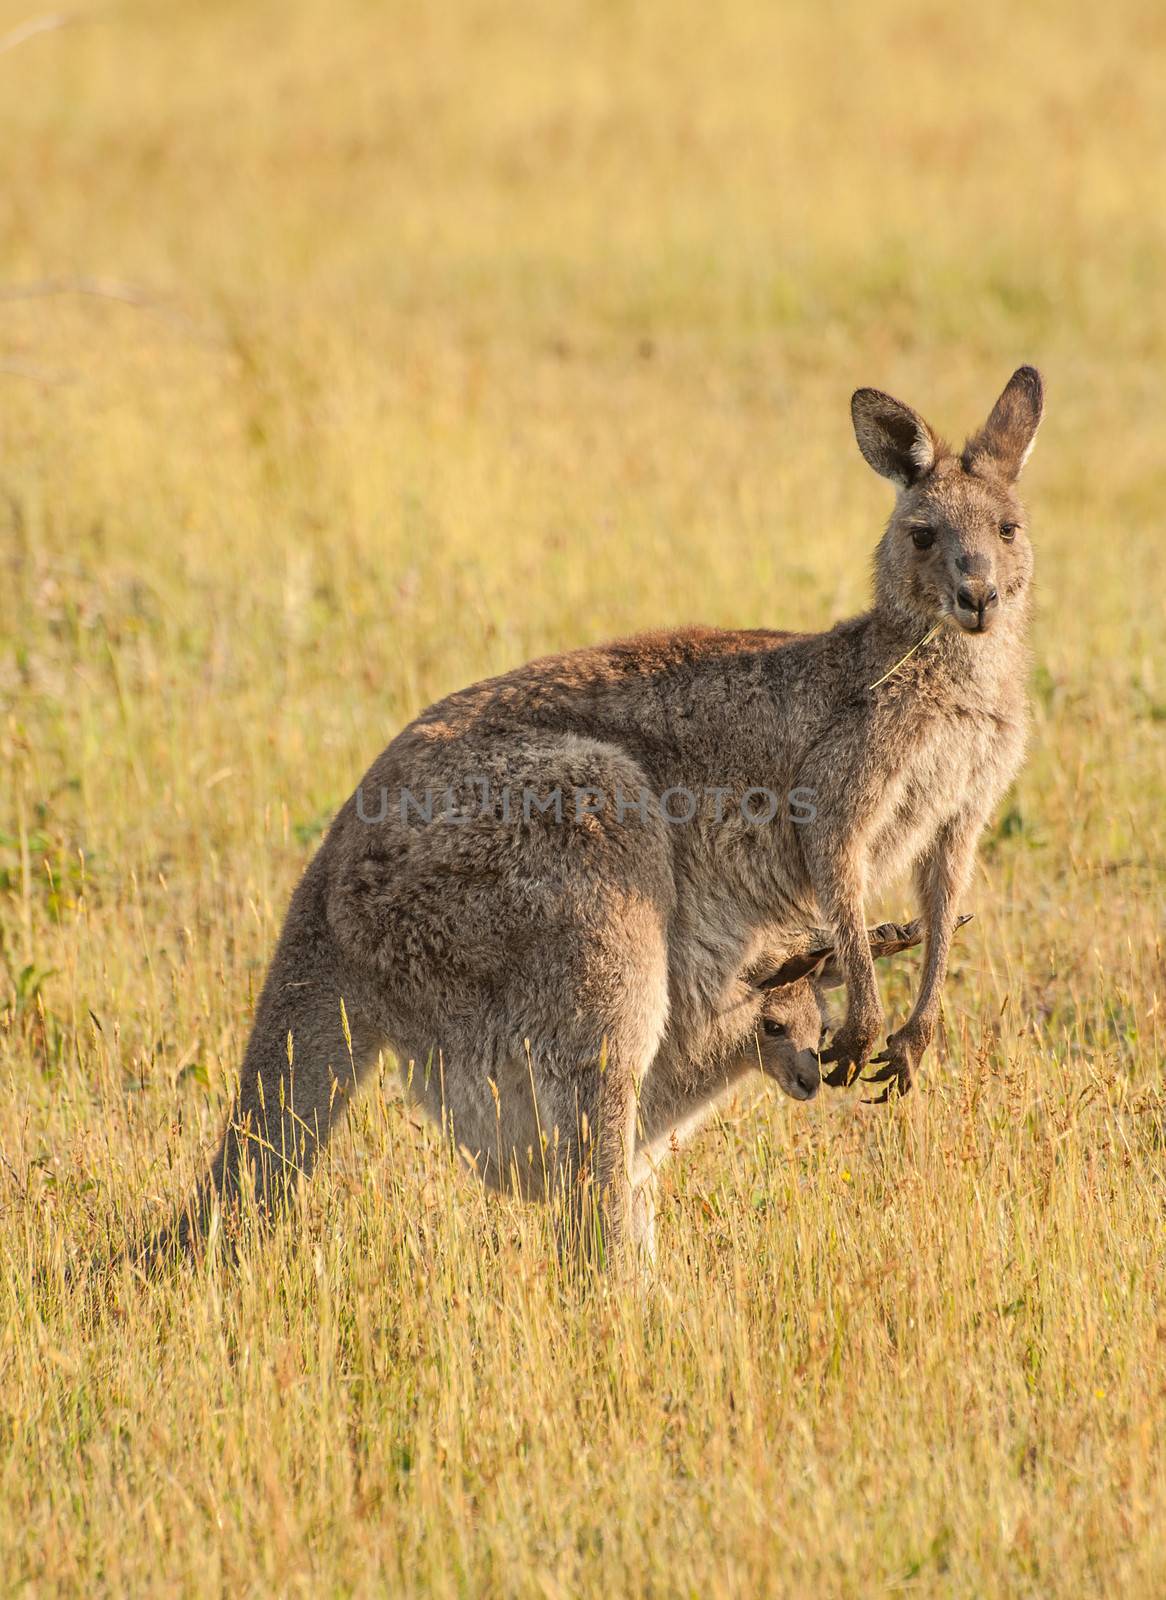 Kangaroo by fyletto